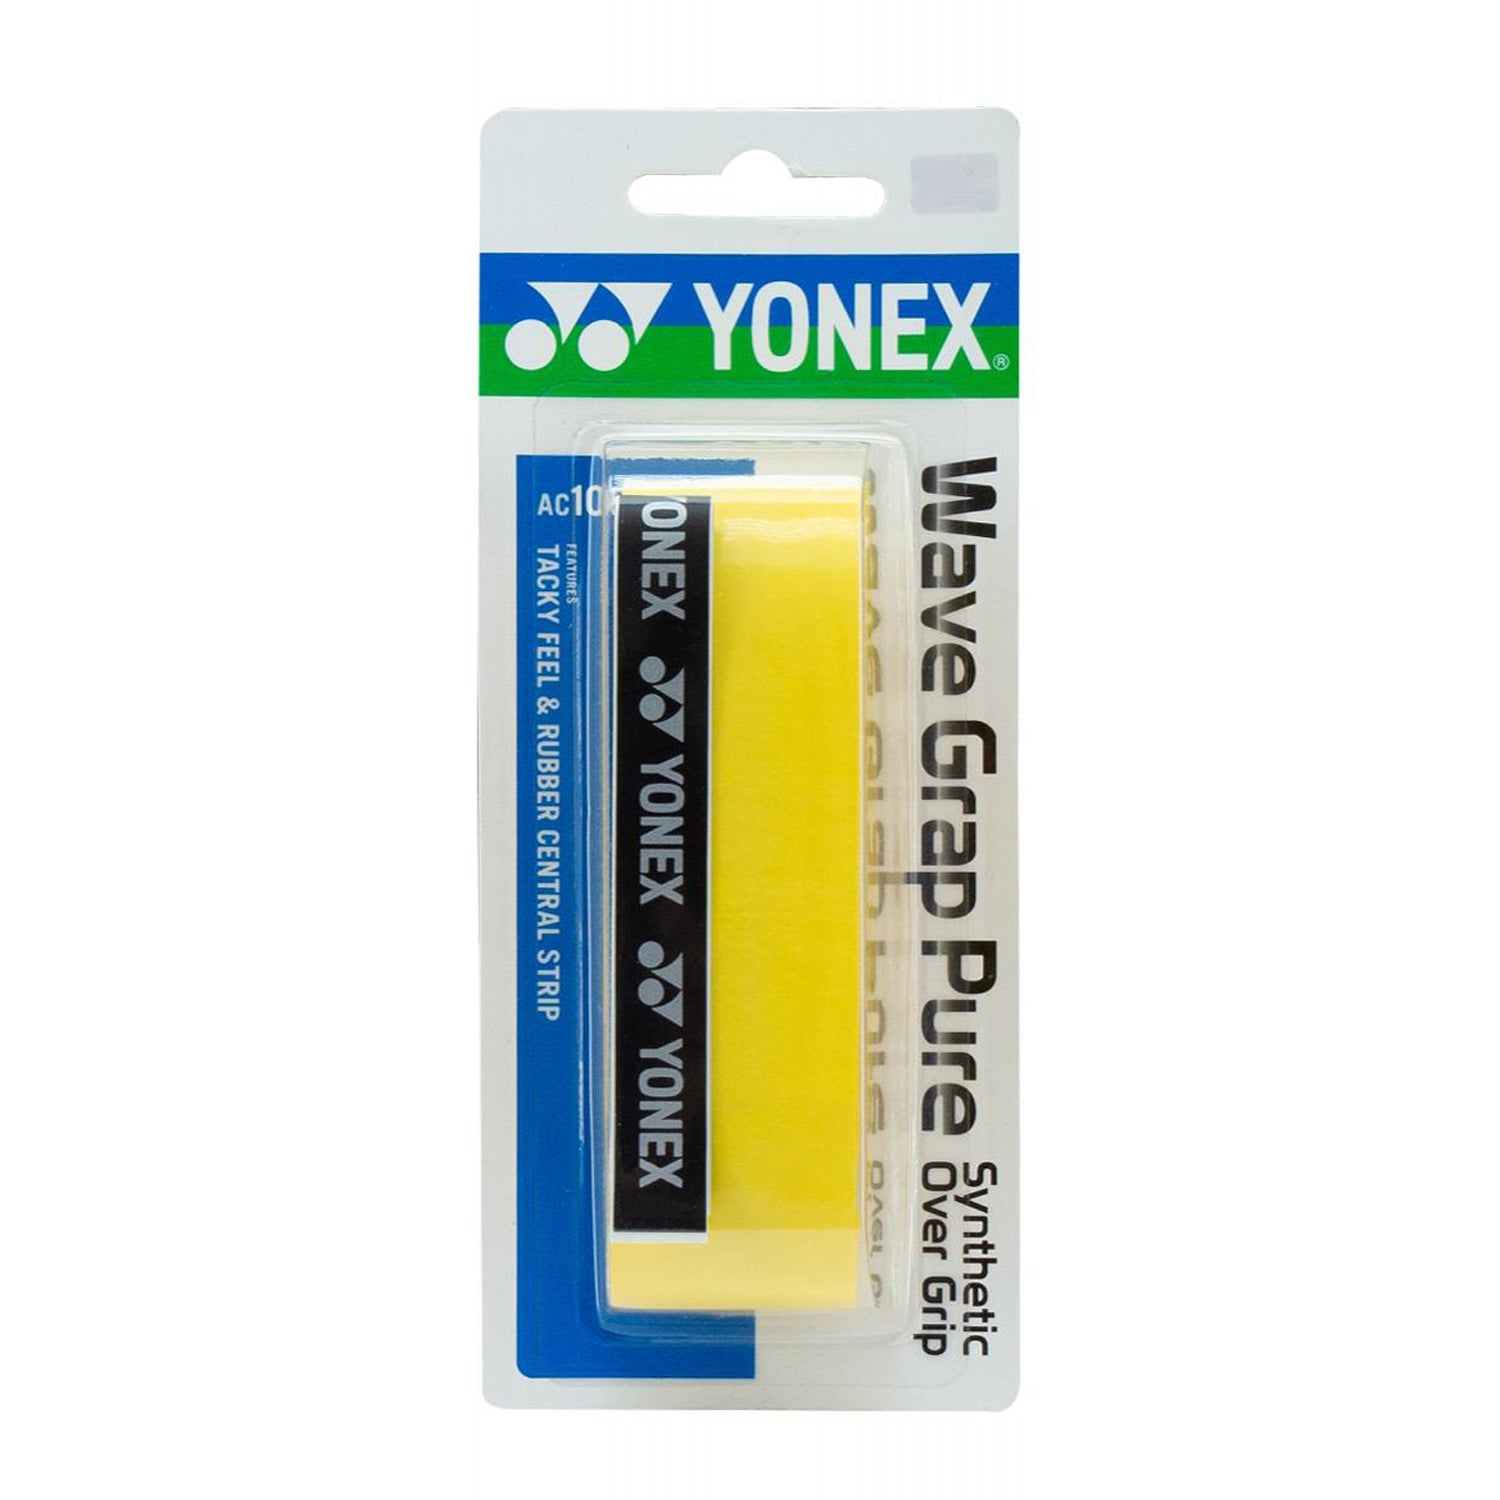 Yonex AC108WEX Wave Grap Pure Synthetic Over Grip - Best Price online Prokicksports.com